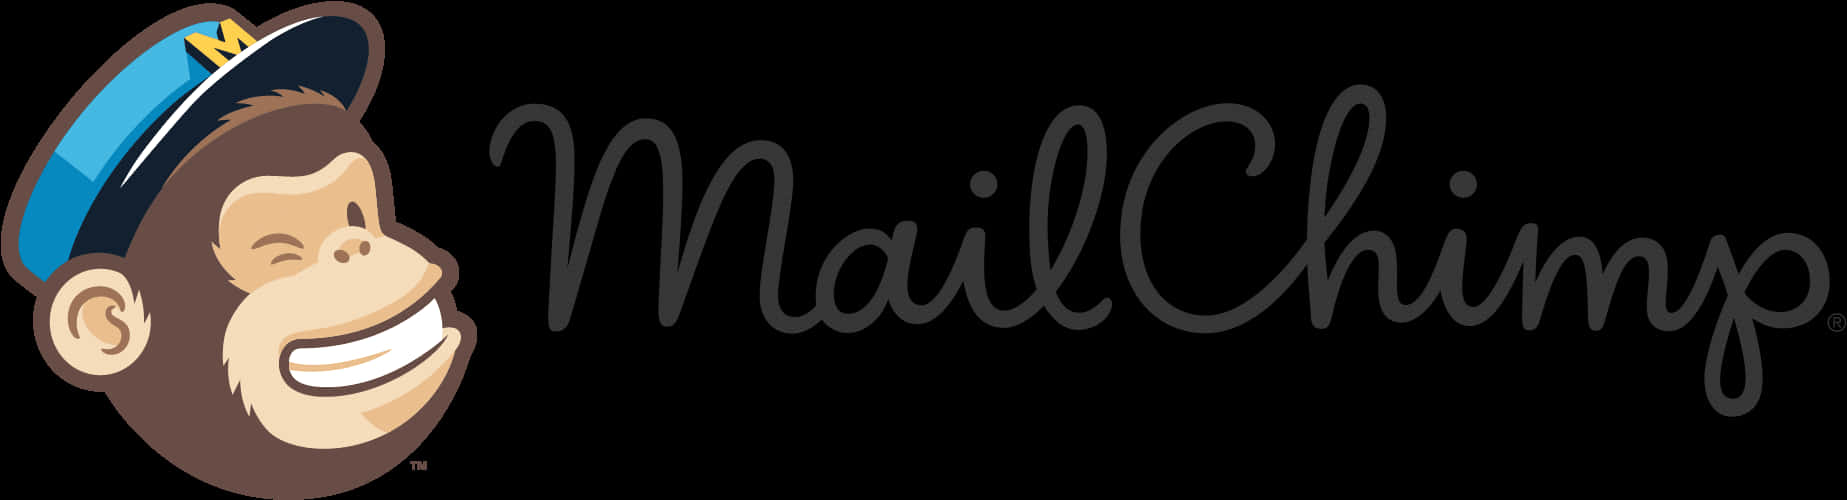 Mailchimp Logo Png